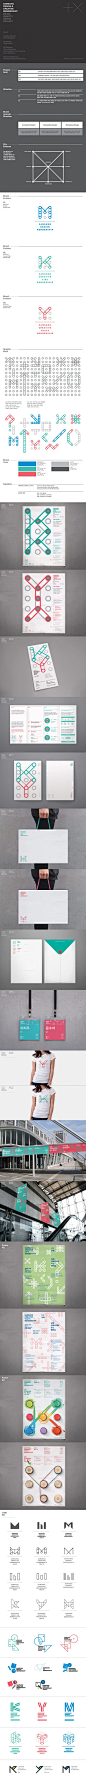 Samsung Design & Creative Membership BX Design Project by Plus X, via Behance